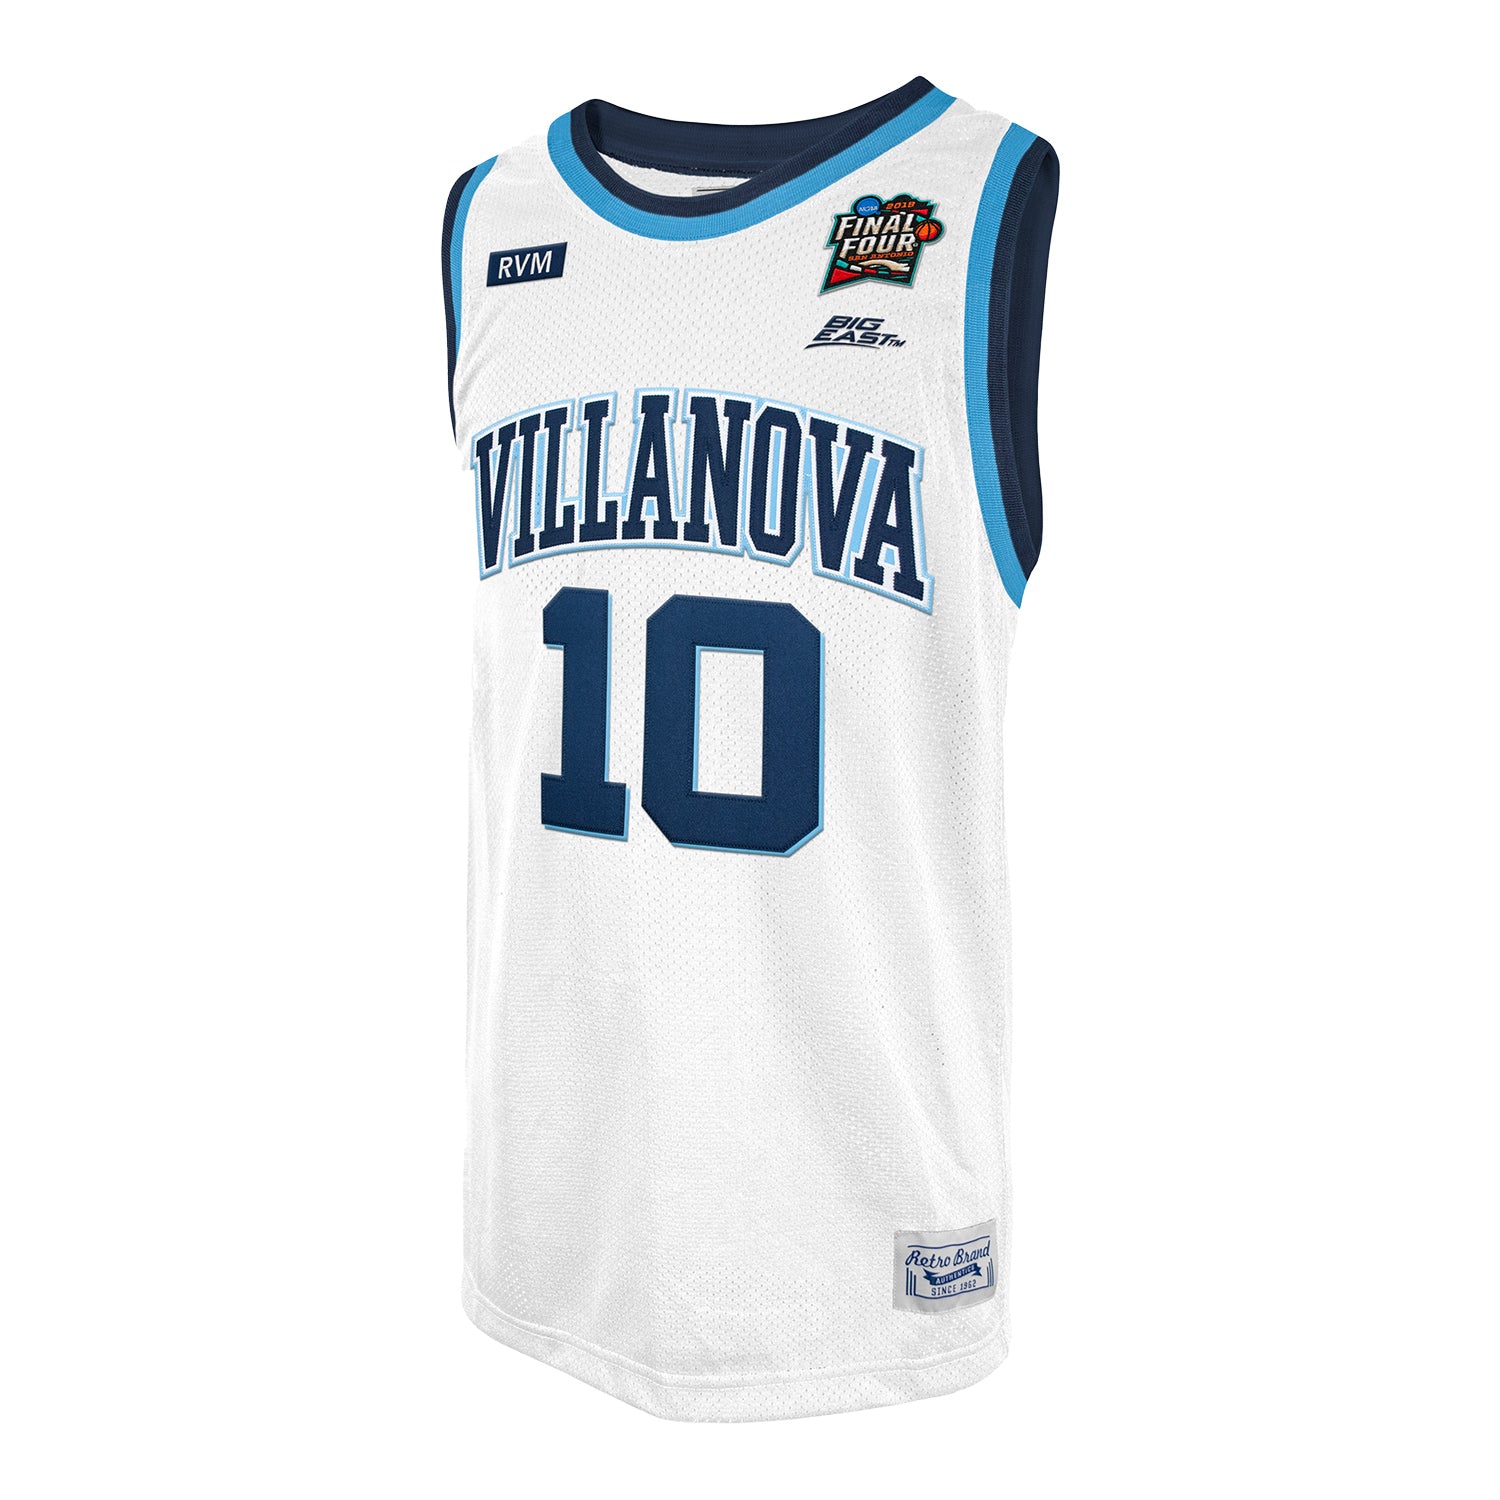 Villanova Wildcats Jerseys, Basketball Uniforms